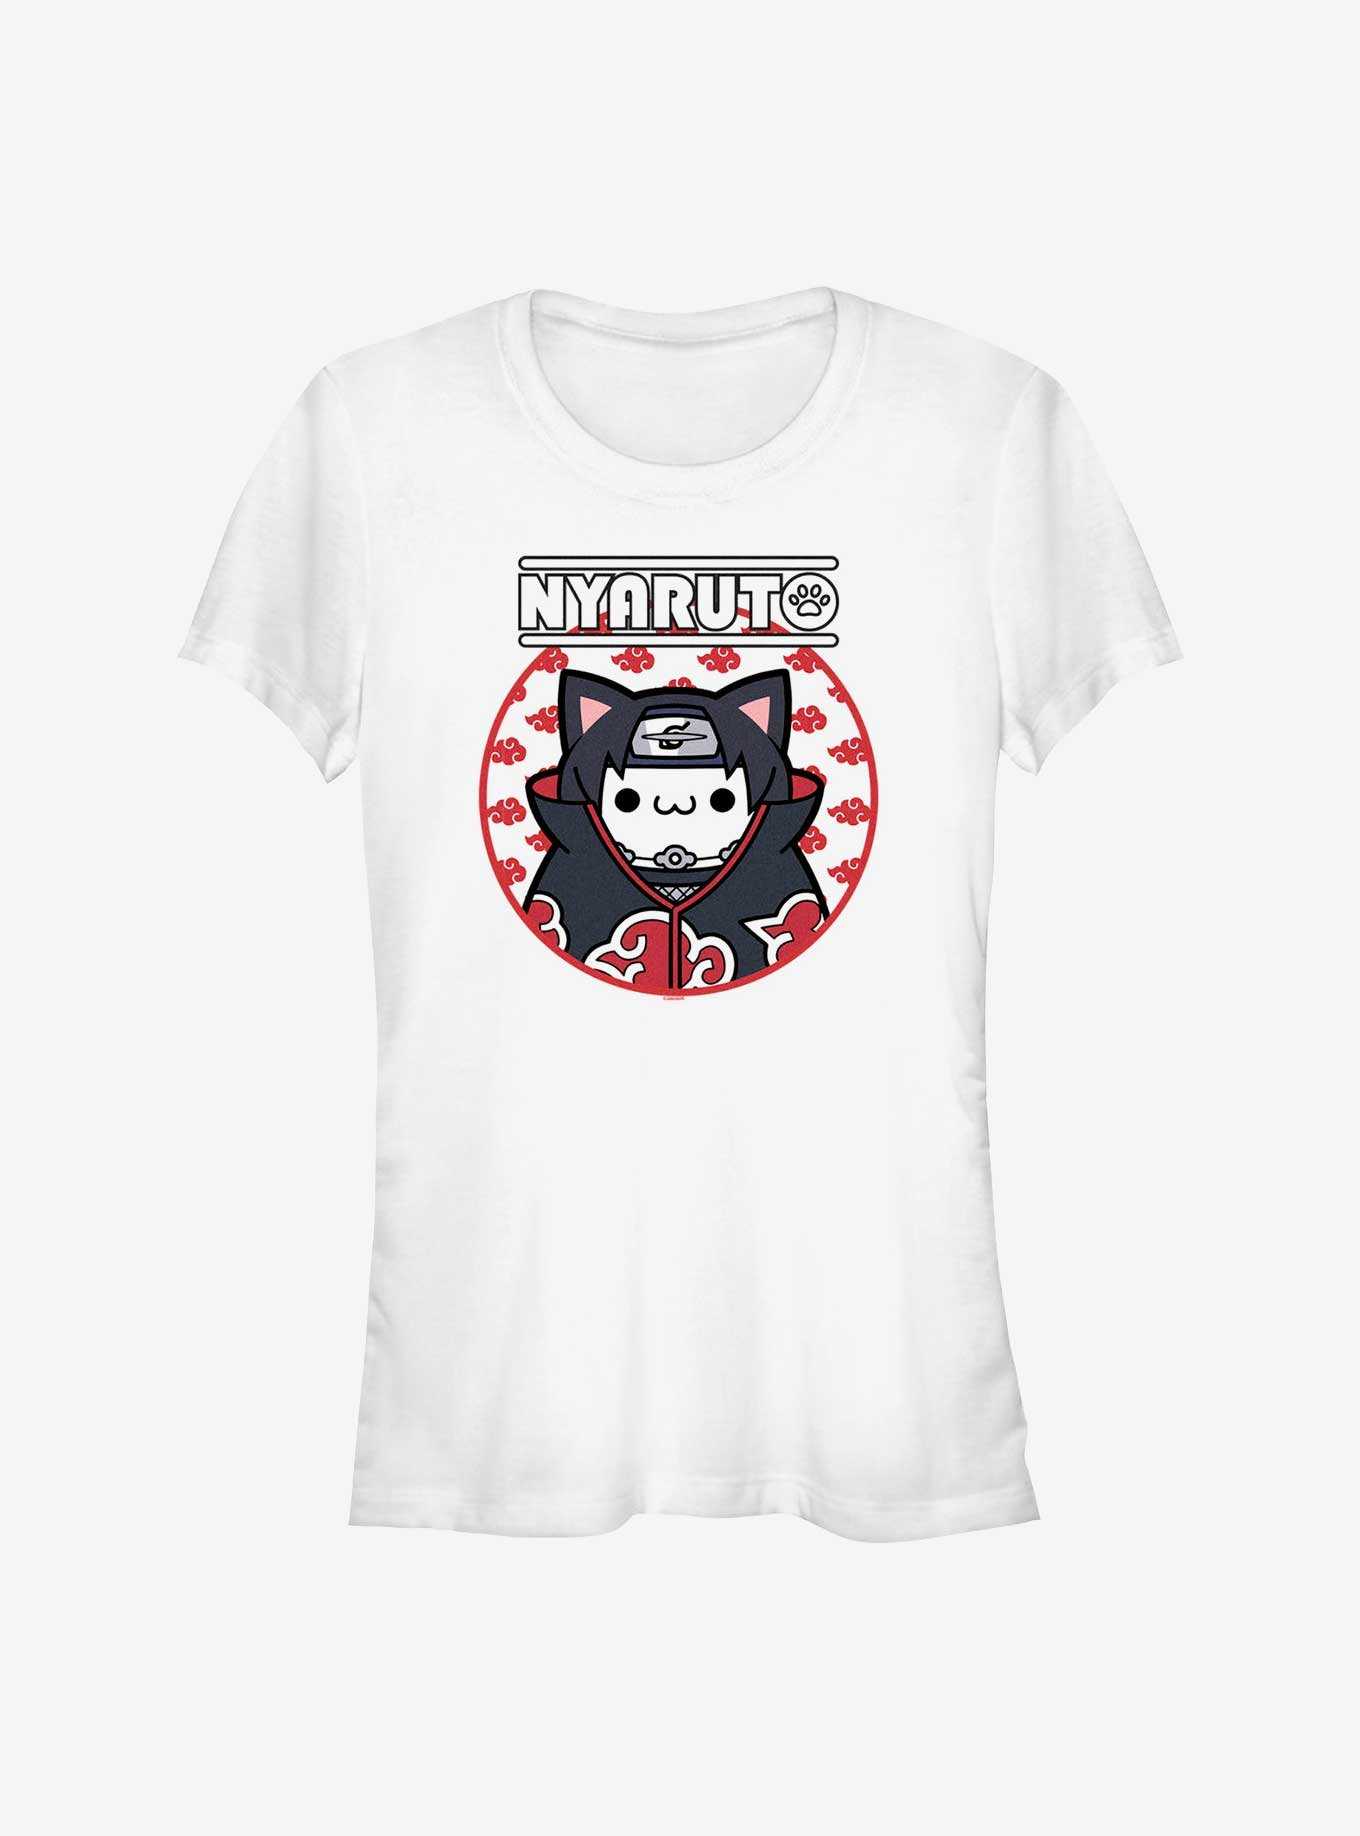 Naruto Nyaruto Itachi Cat Girls T-Shirt, , hi-res